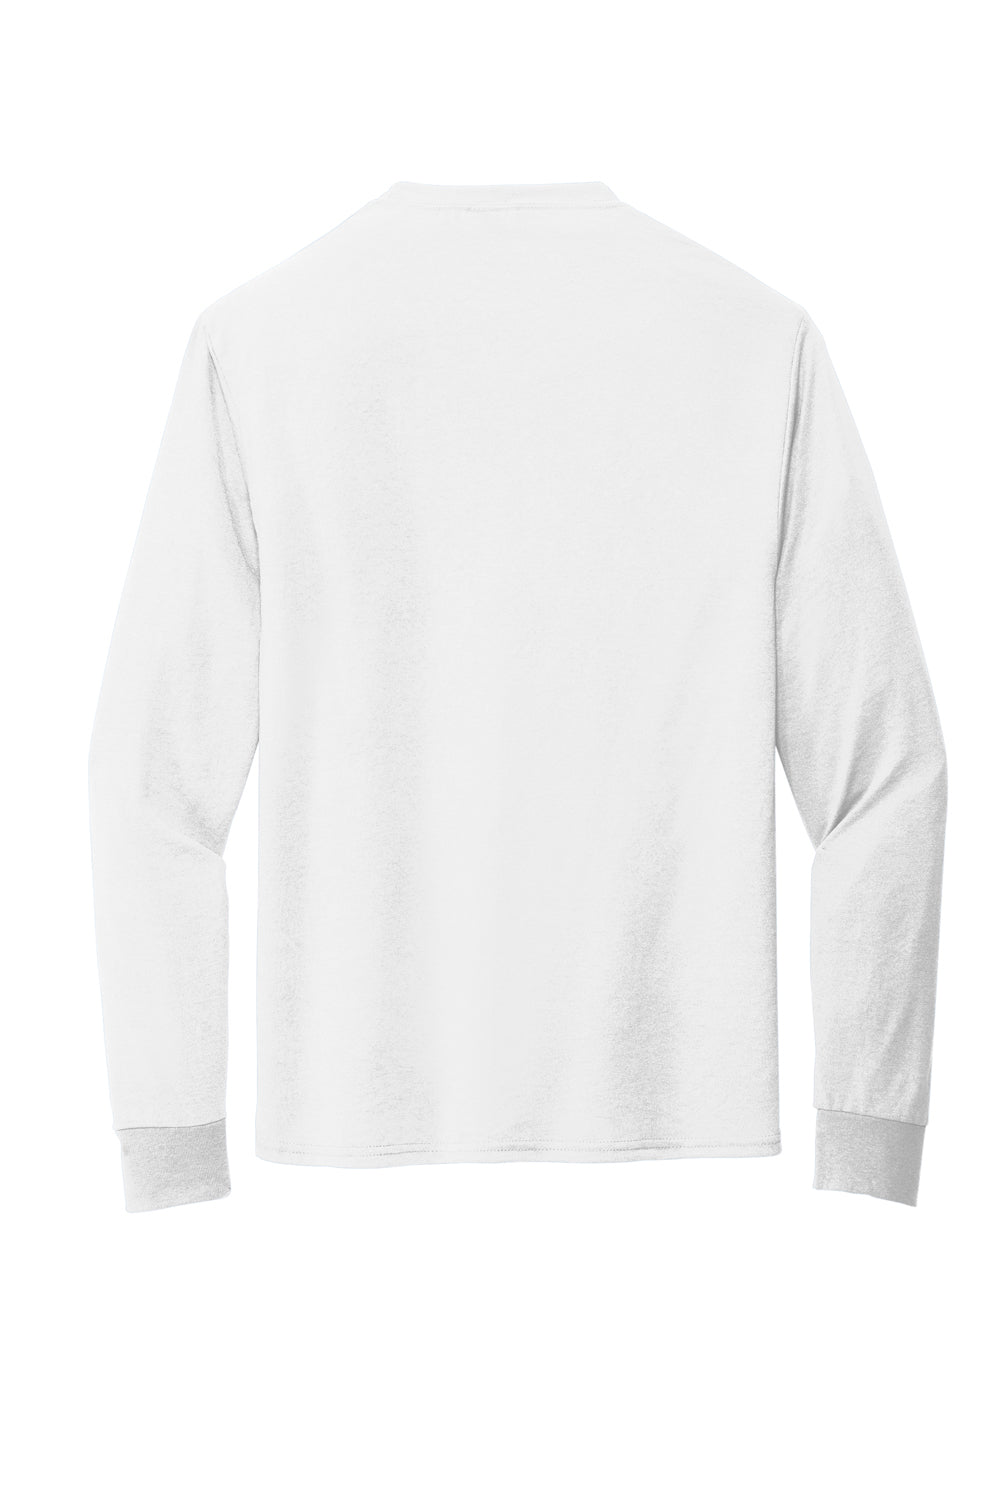 Jerzees 21LS Dri-Power Long Sleeve Crewneck T-Shirt White Flat Back